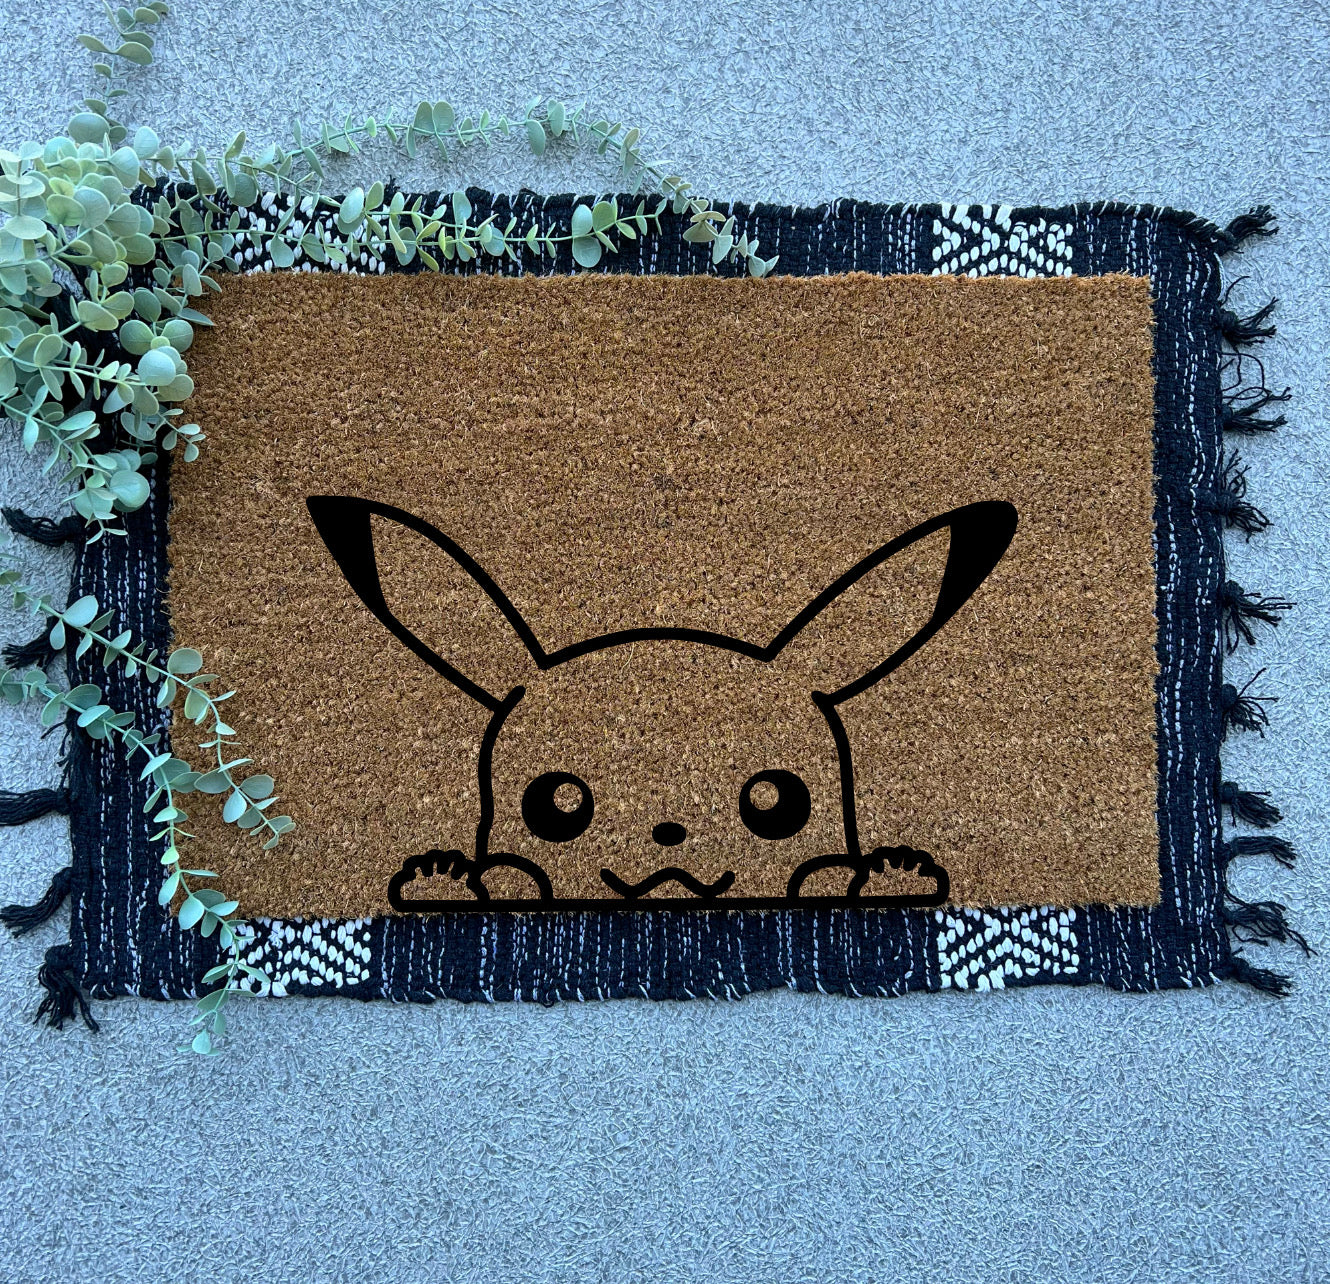 (Pokémon) Pikachu